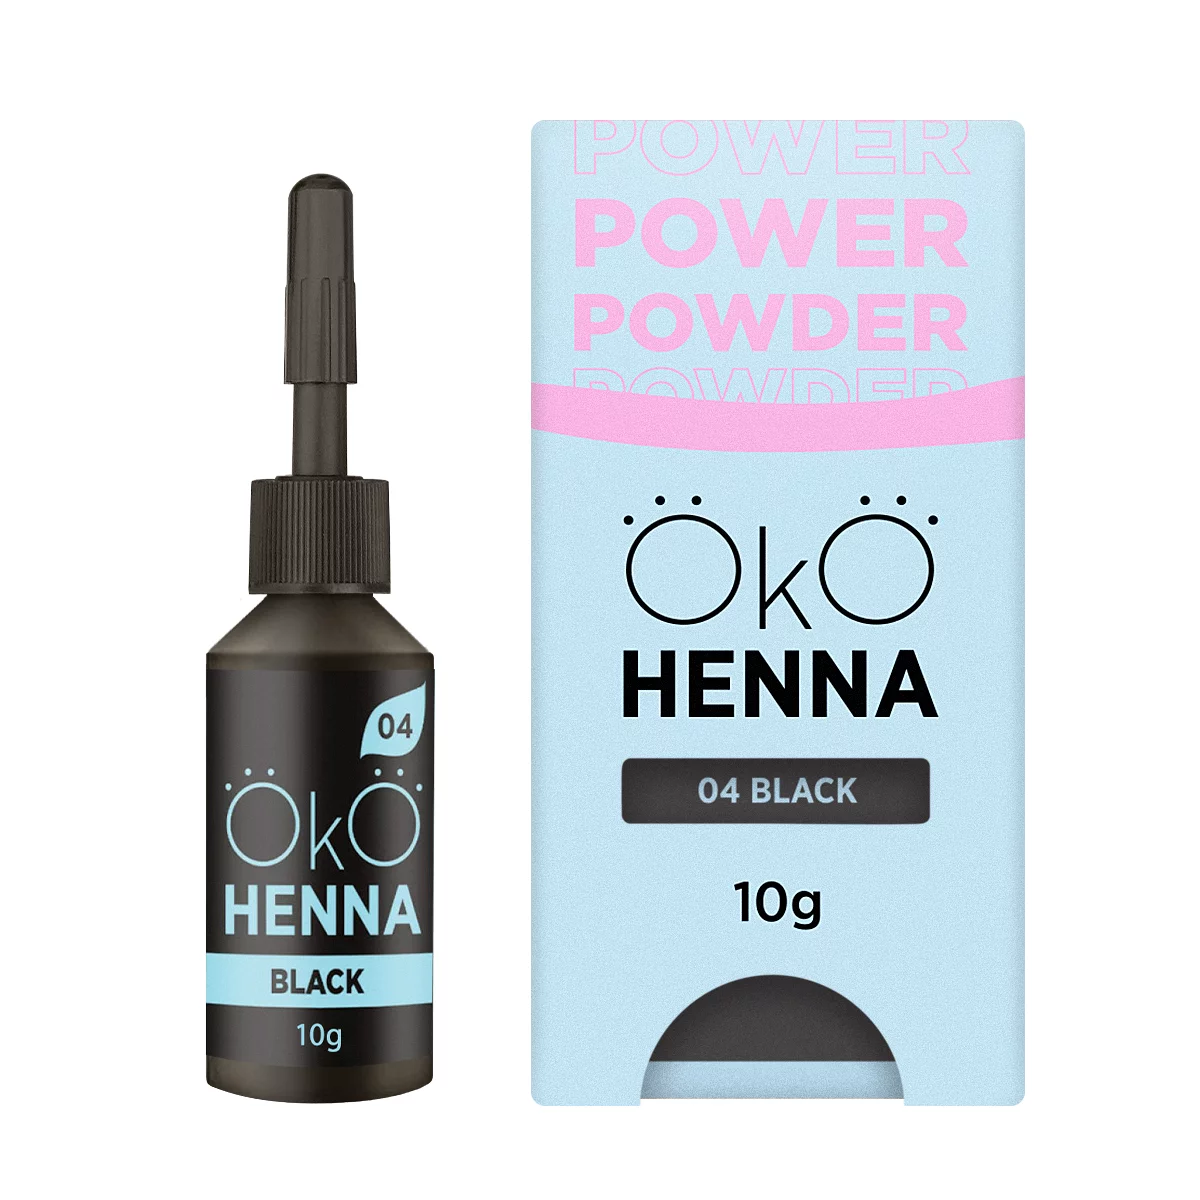 OKO Power Powder - 04 Black (10gr)